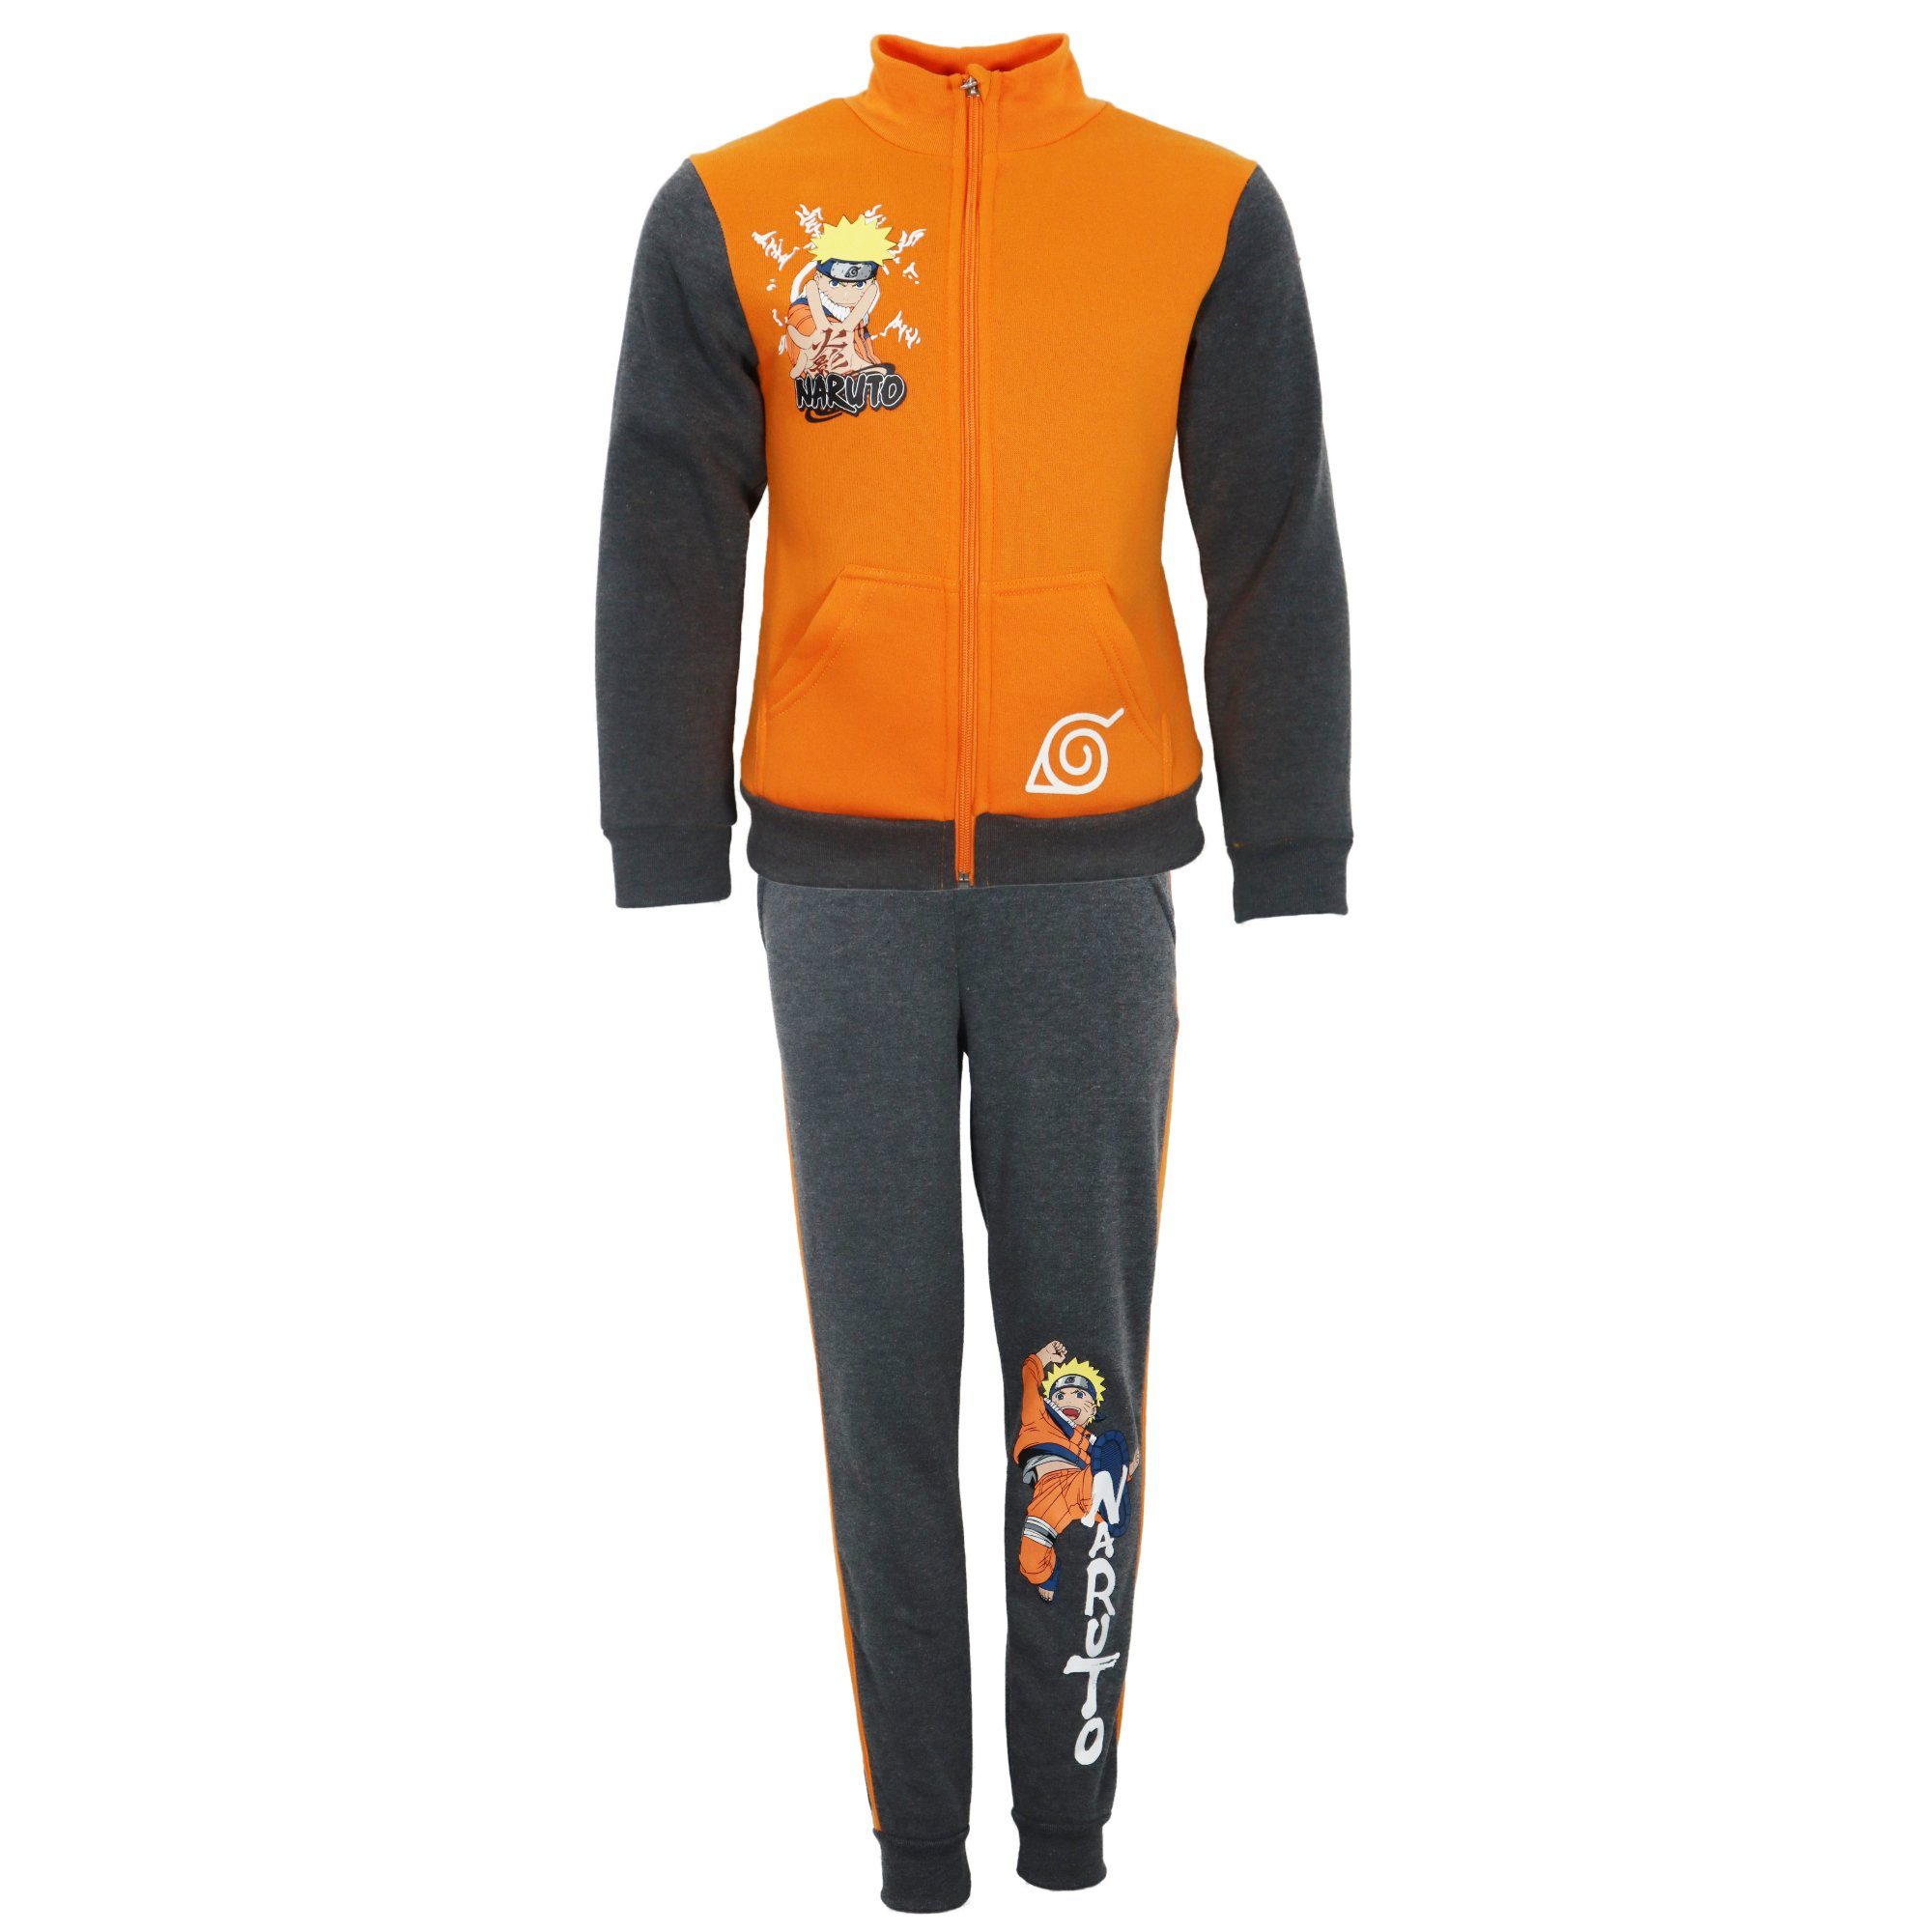 Naruto Jogginganzug Naruto Shippuden Joggingset Sporthose Hose Sweater Jacke, Gr. 98 bis 140 Orange